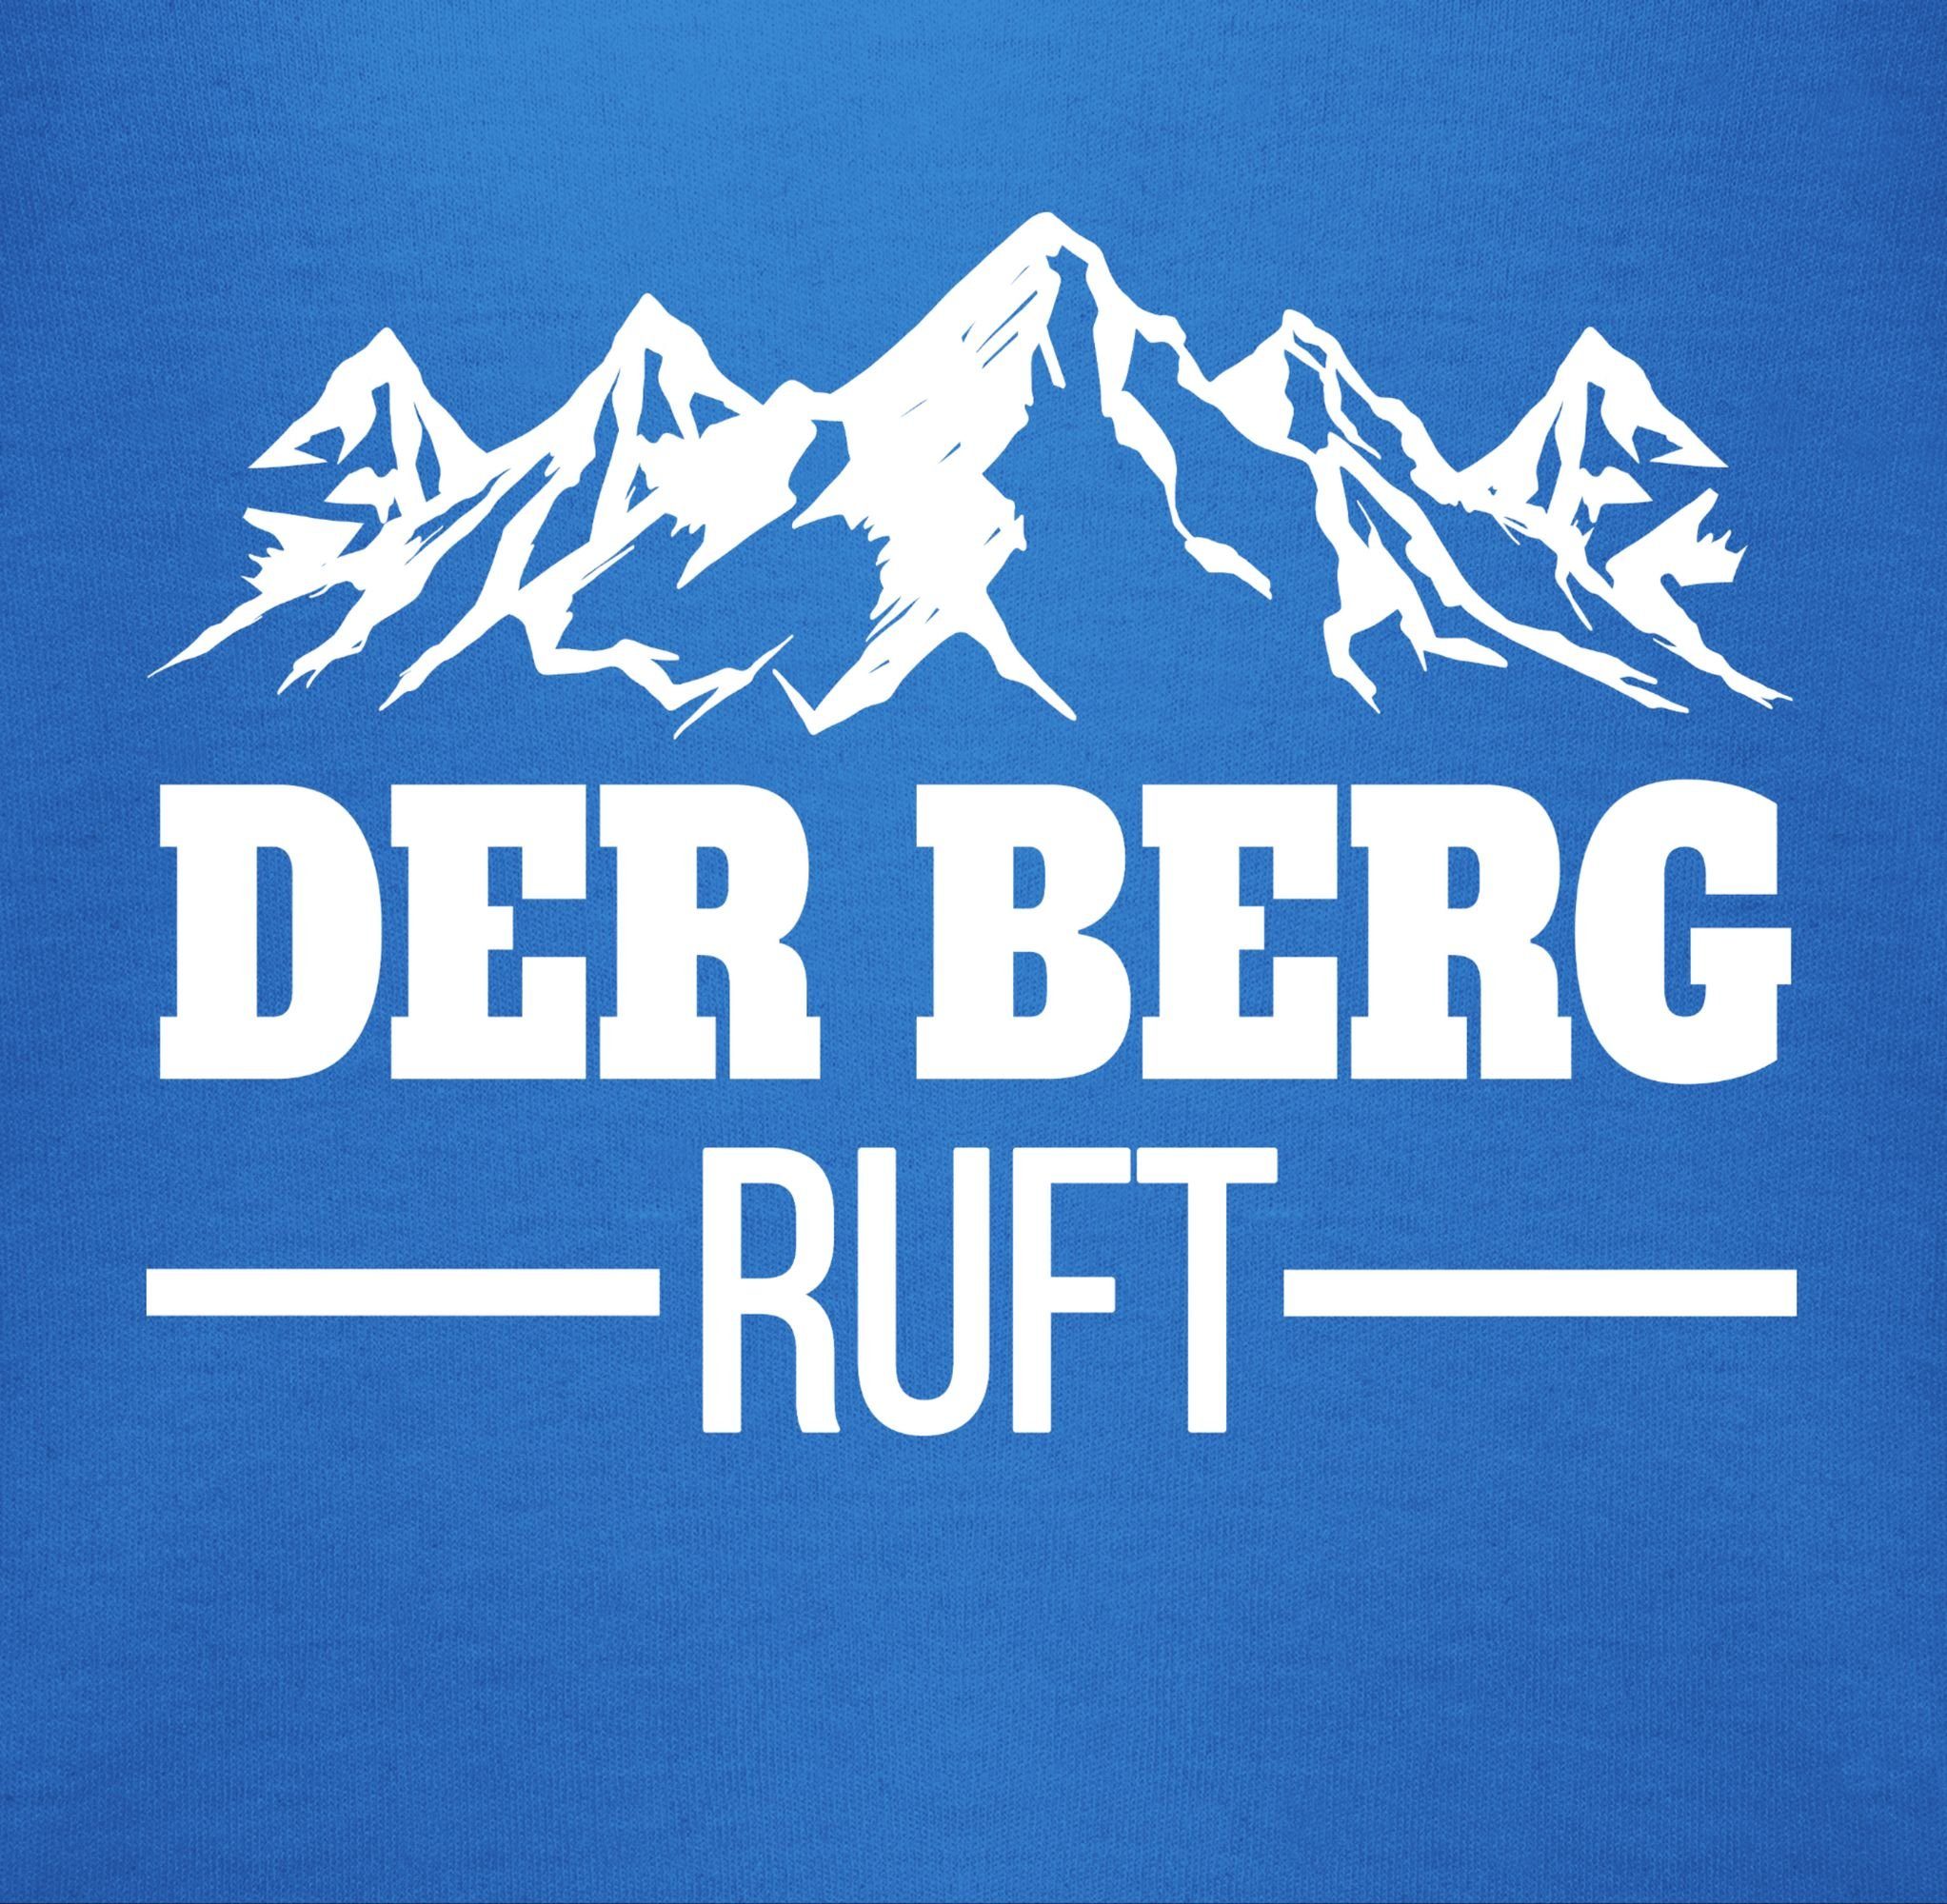 Shirtracer Shirtbody Royalblau Bewegung ruft Der 3 Baby & Sport Berg